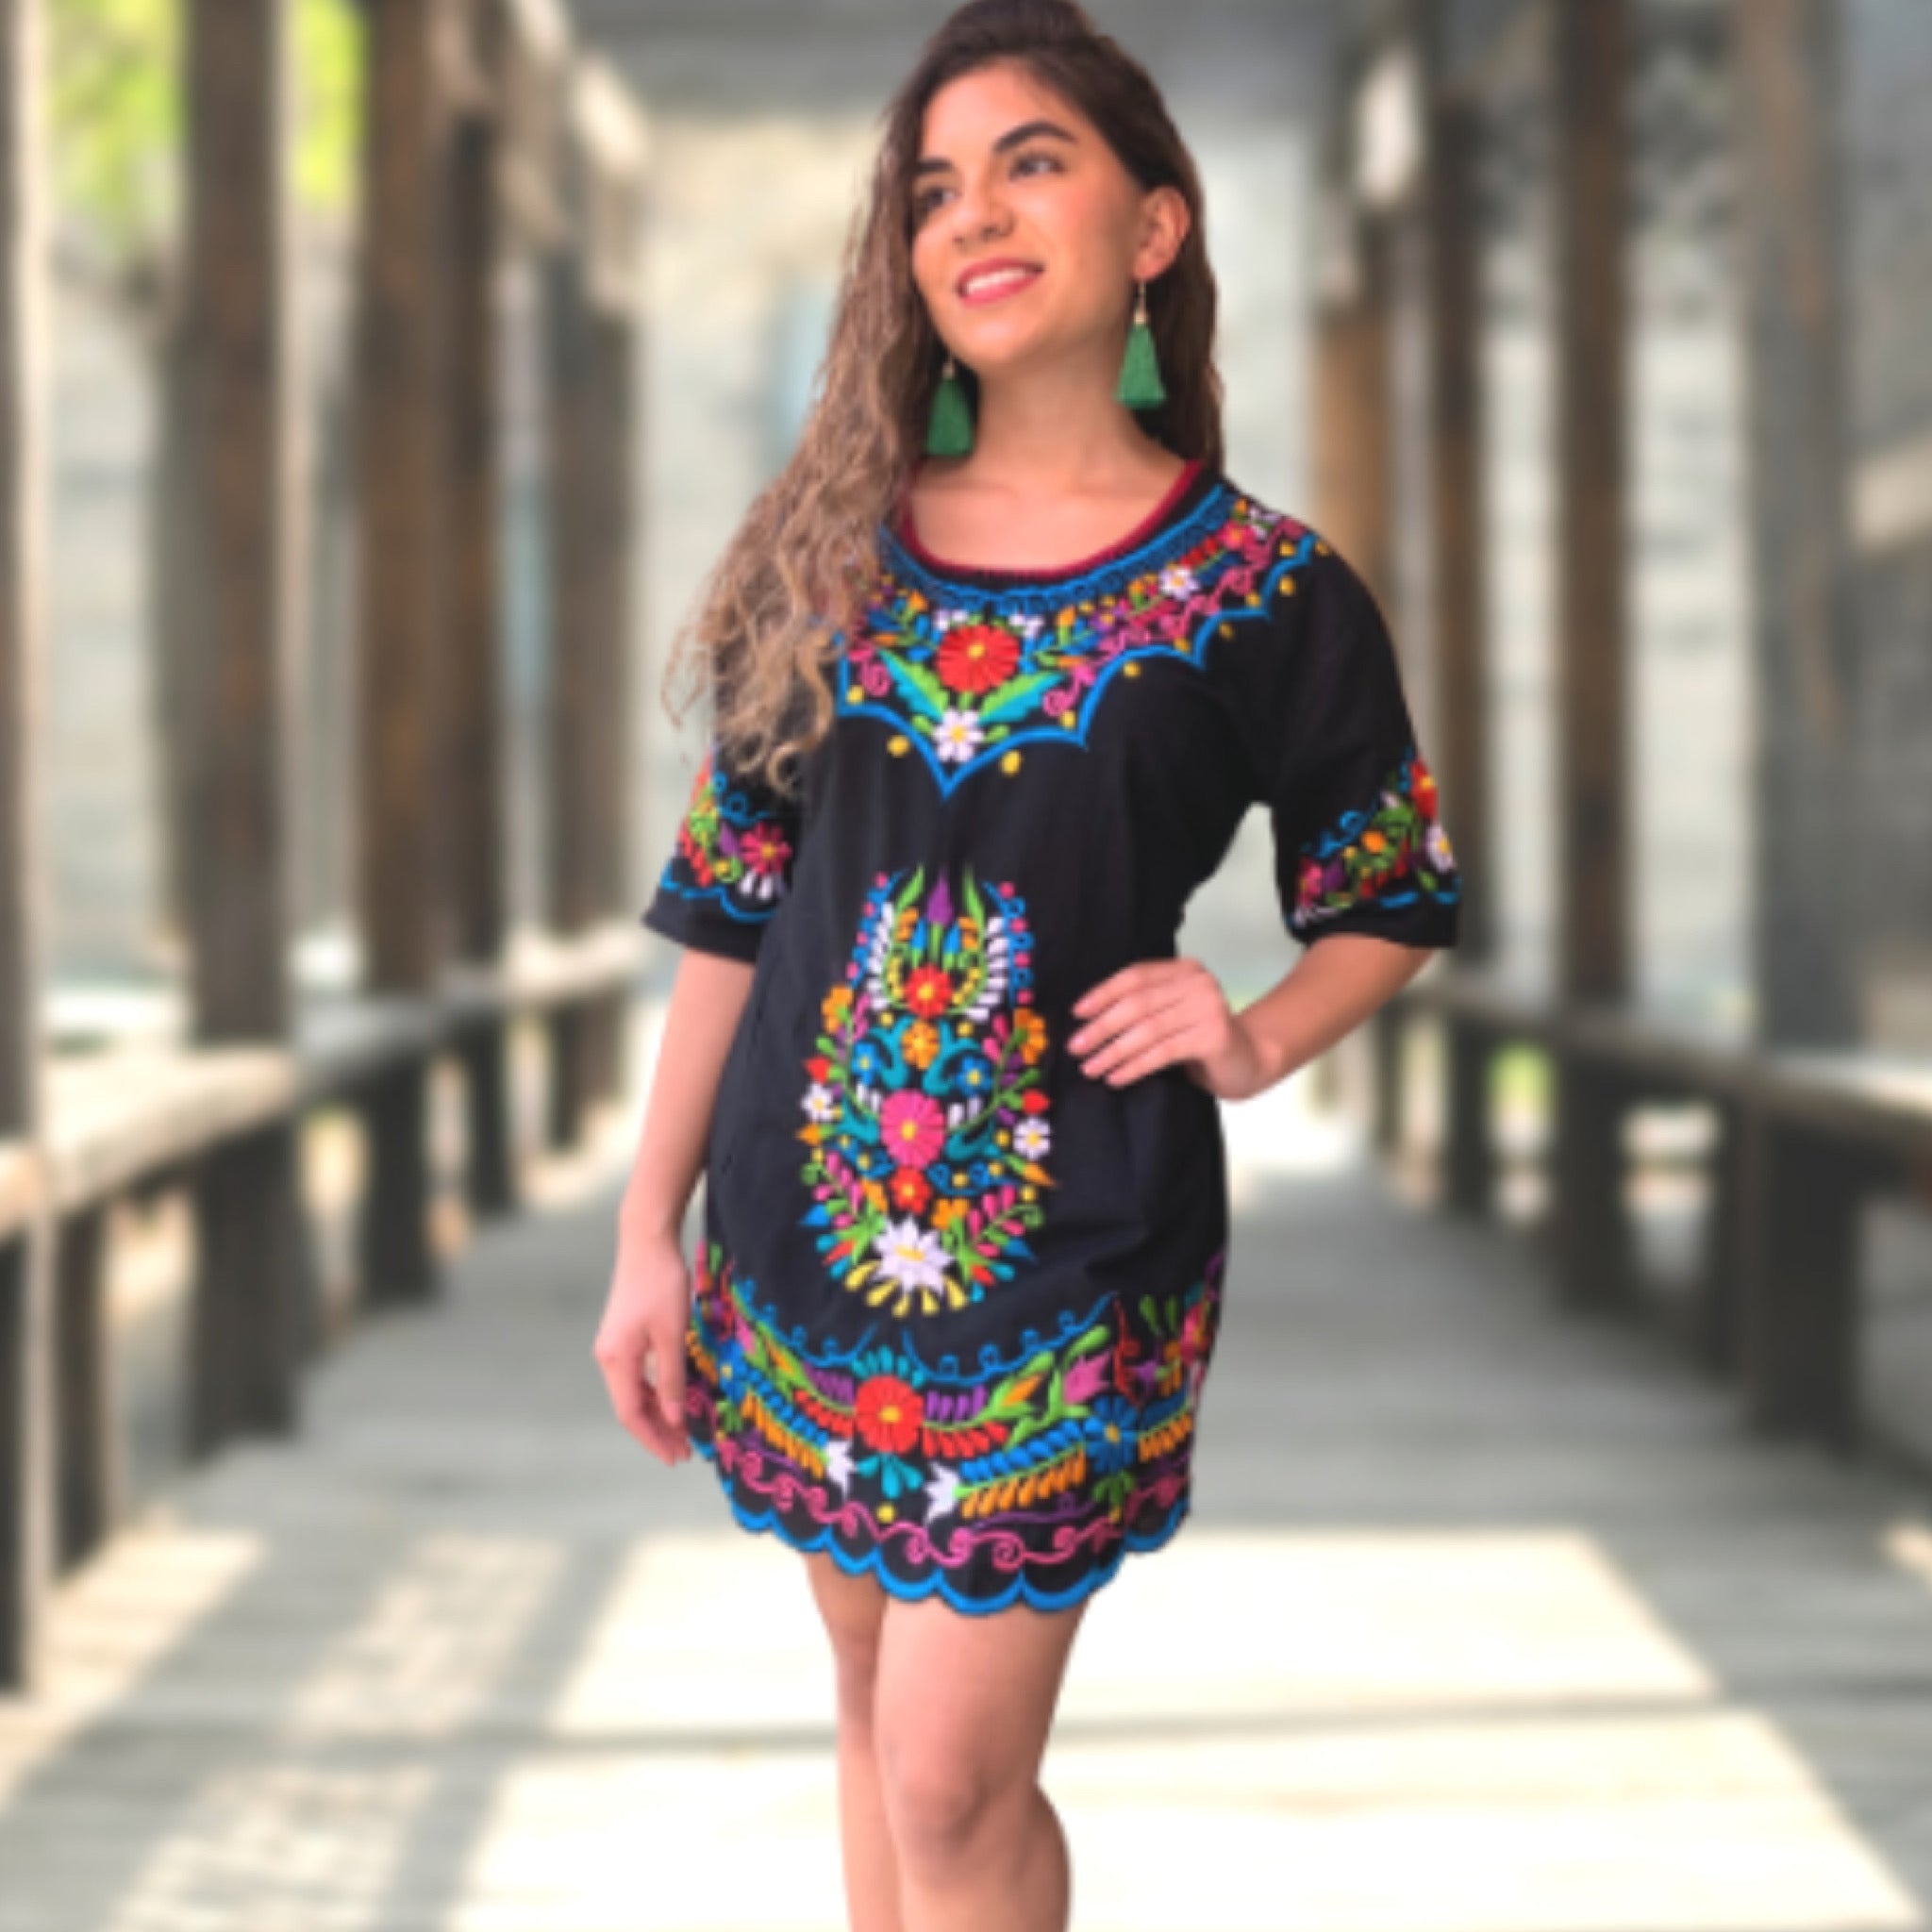 Vestidos Mexicanos Bordados / Mexican Embroidered Dresses